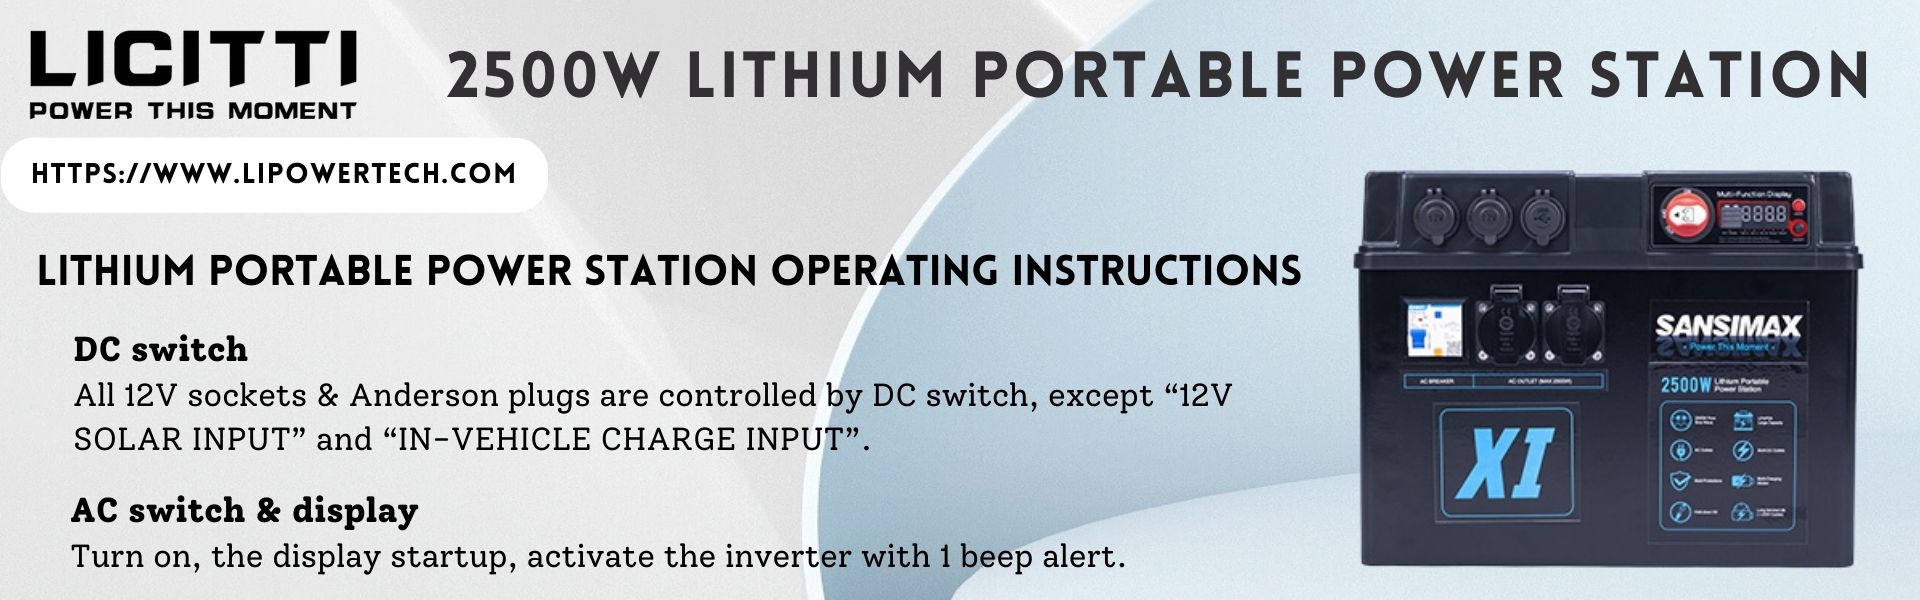 2500w-lithium-portable-power-station